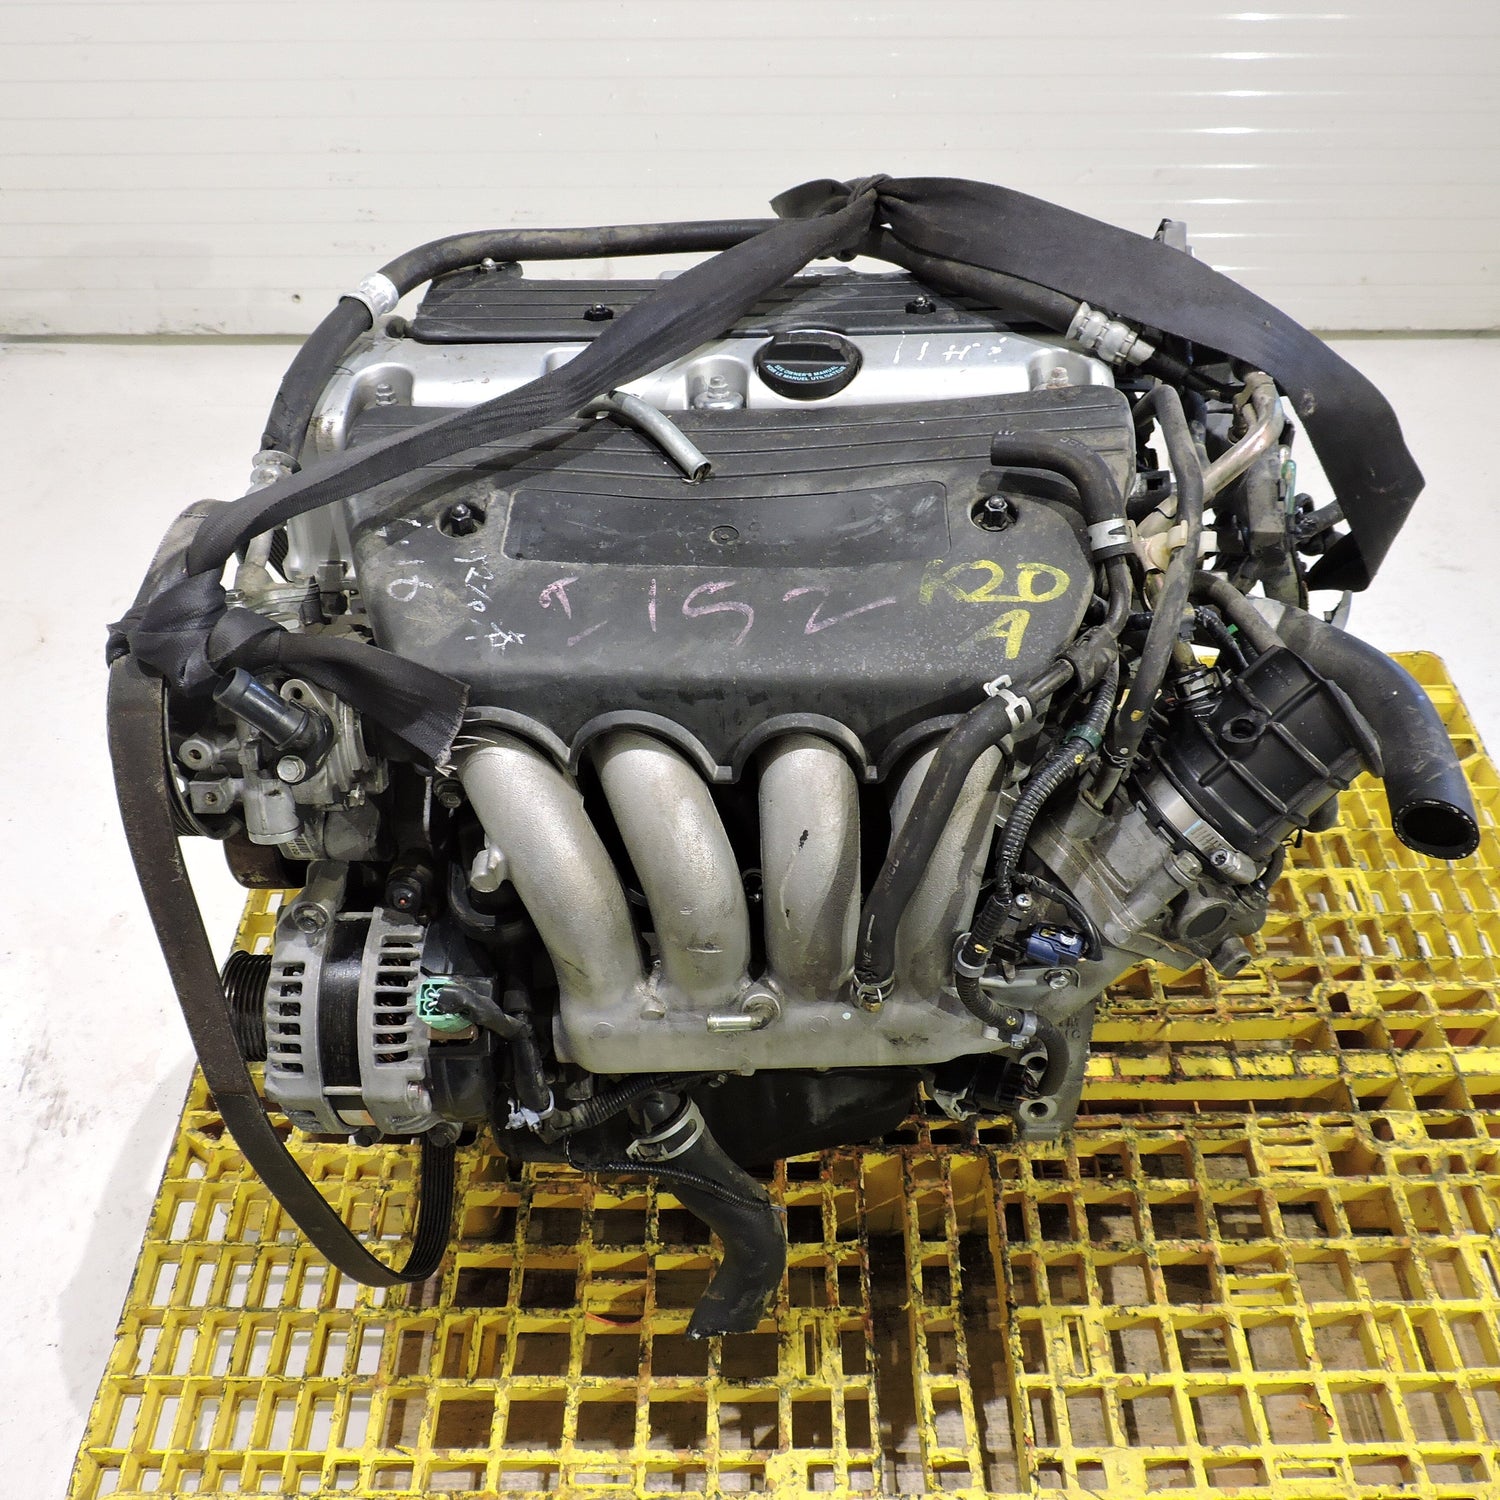 Honda Civic Si 2002-2005 2.0L Dohc Vtec JDM Engine - K20a - Replaces K20a3